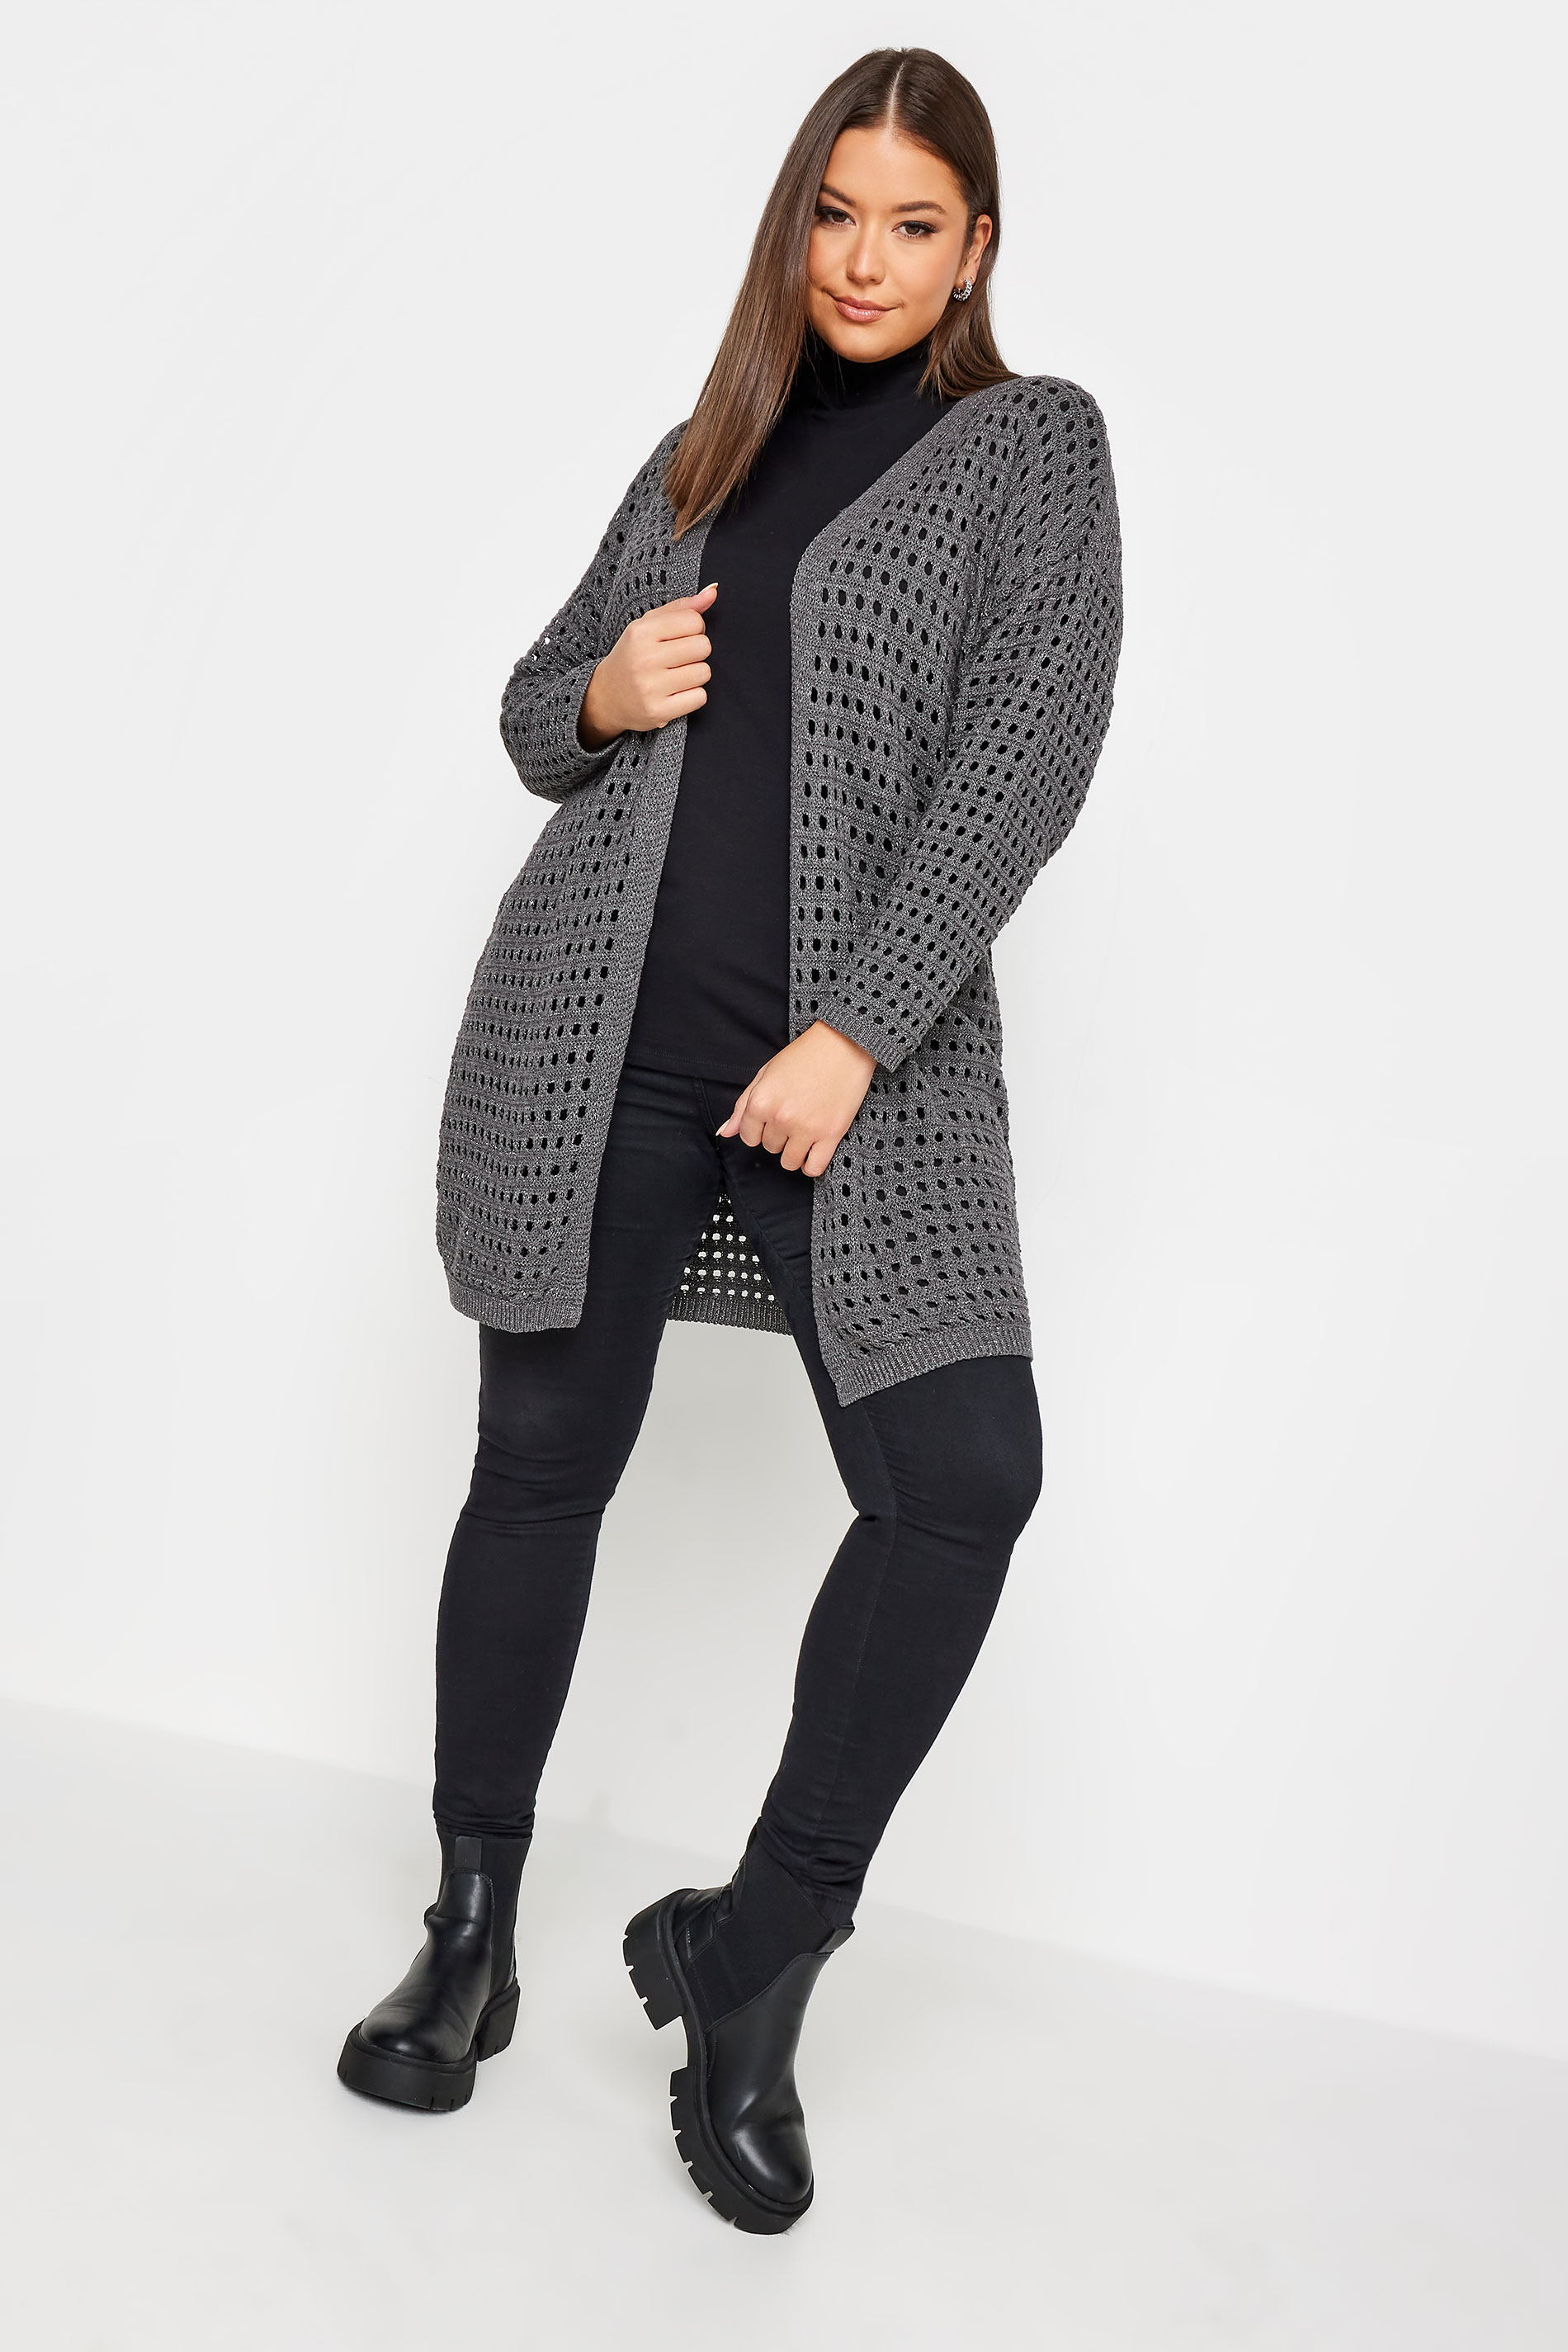 YOURS Plus Size Grey Metallic Crochet Cardigan | Yours Clothing 2